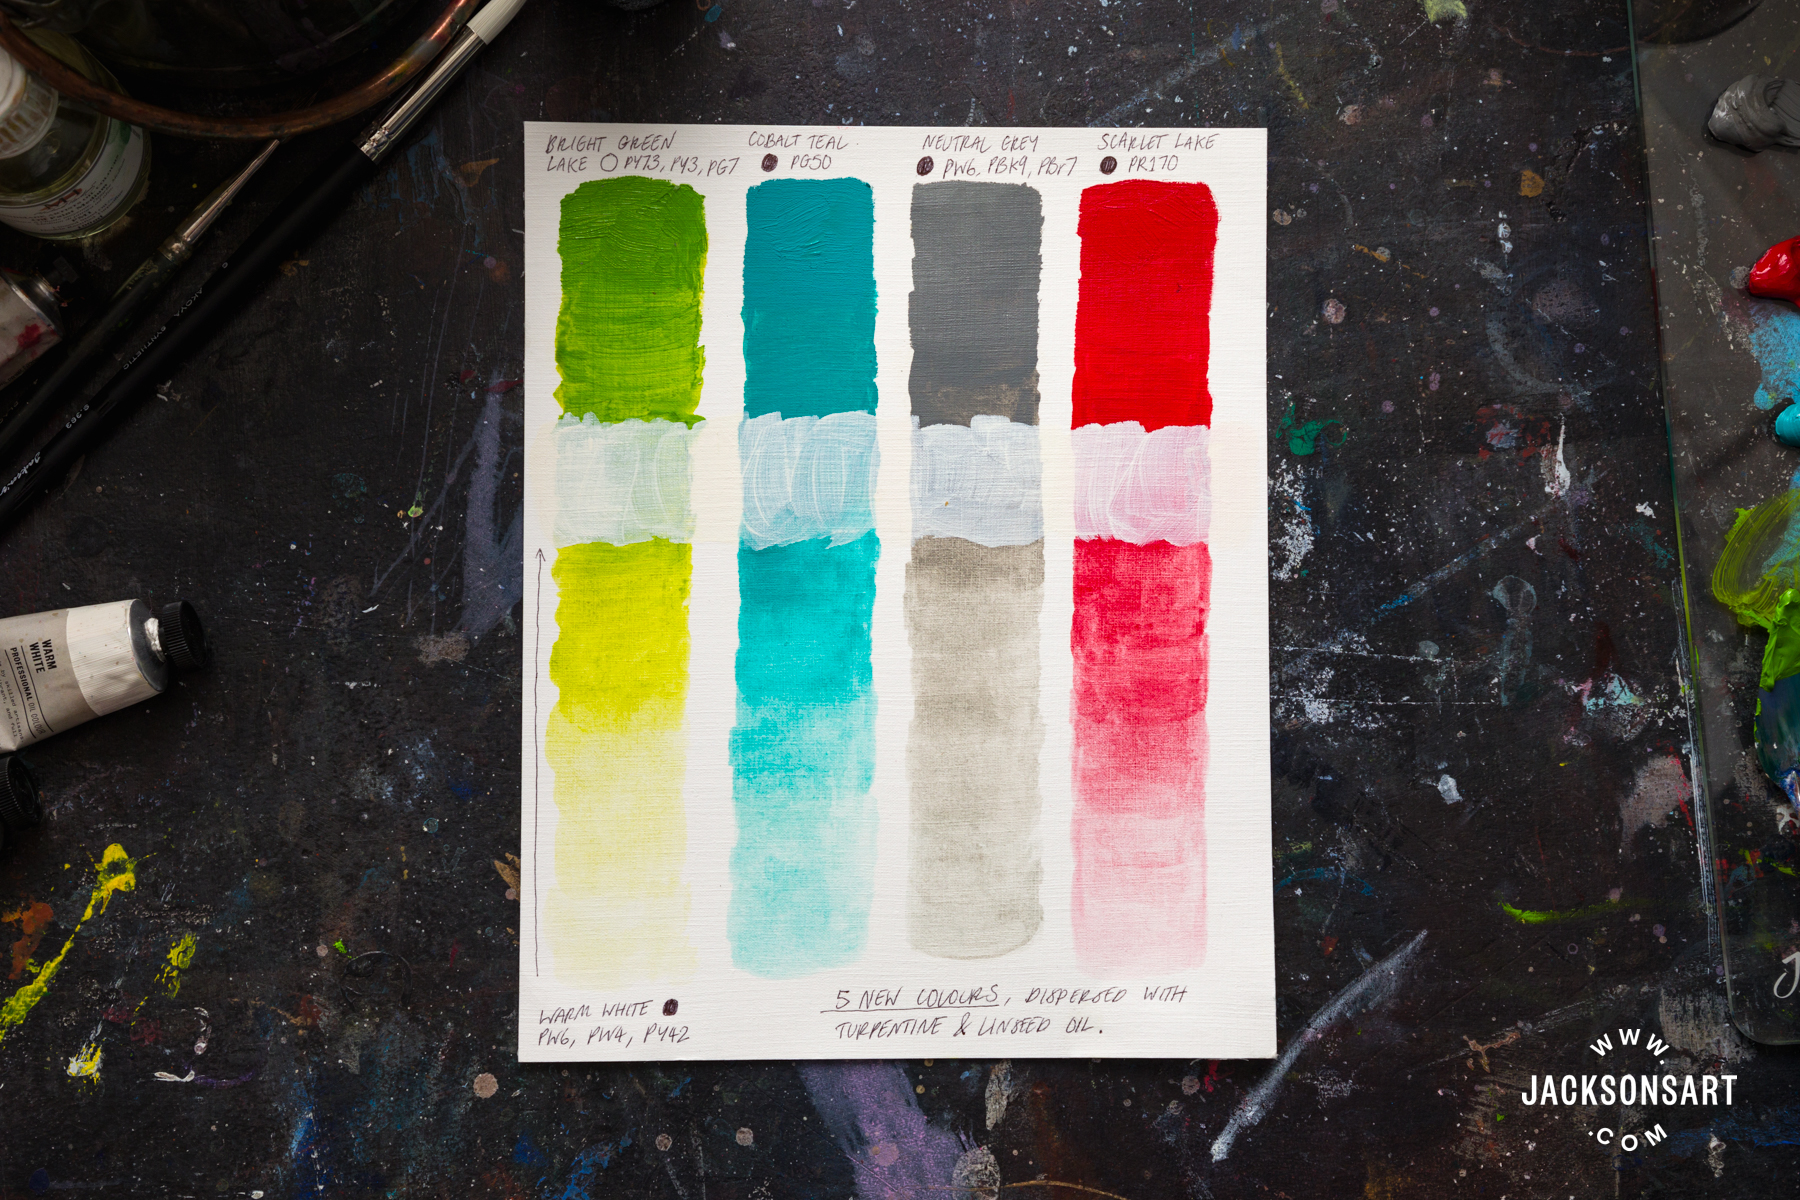 Charvin Oil Paints - Largest Colour Range in the World - Jackson's Art Blog